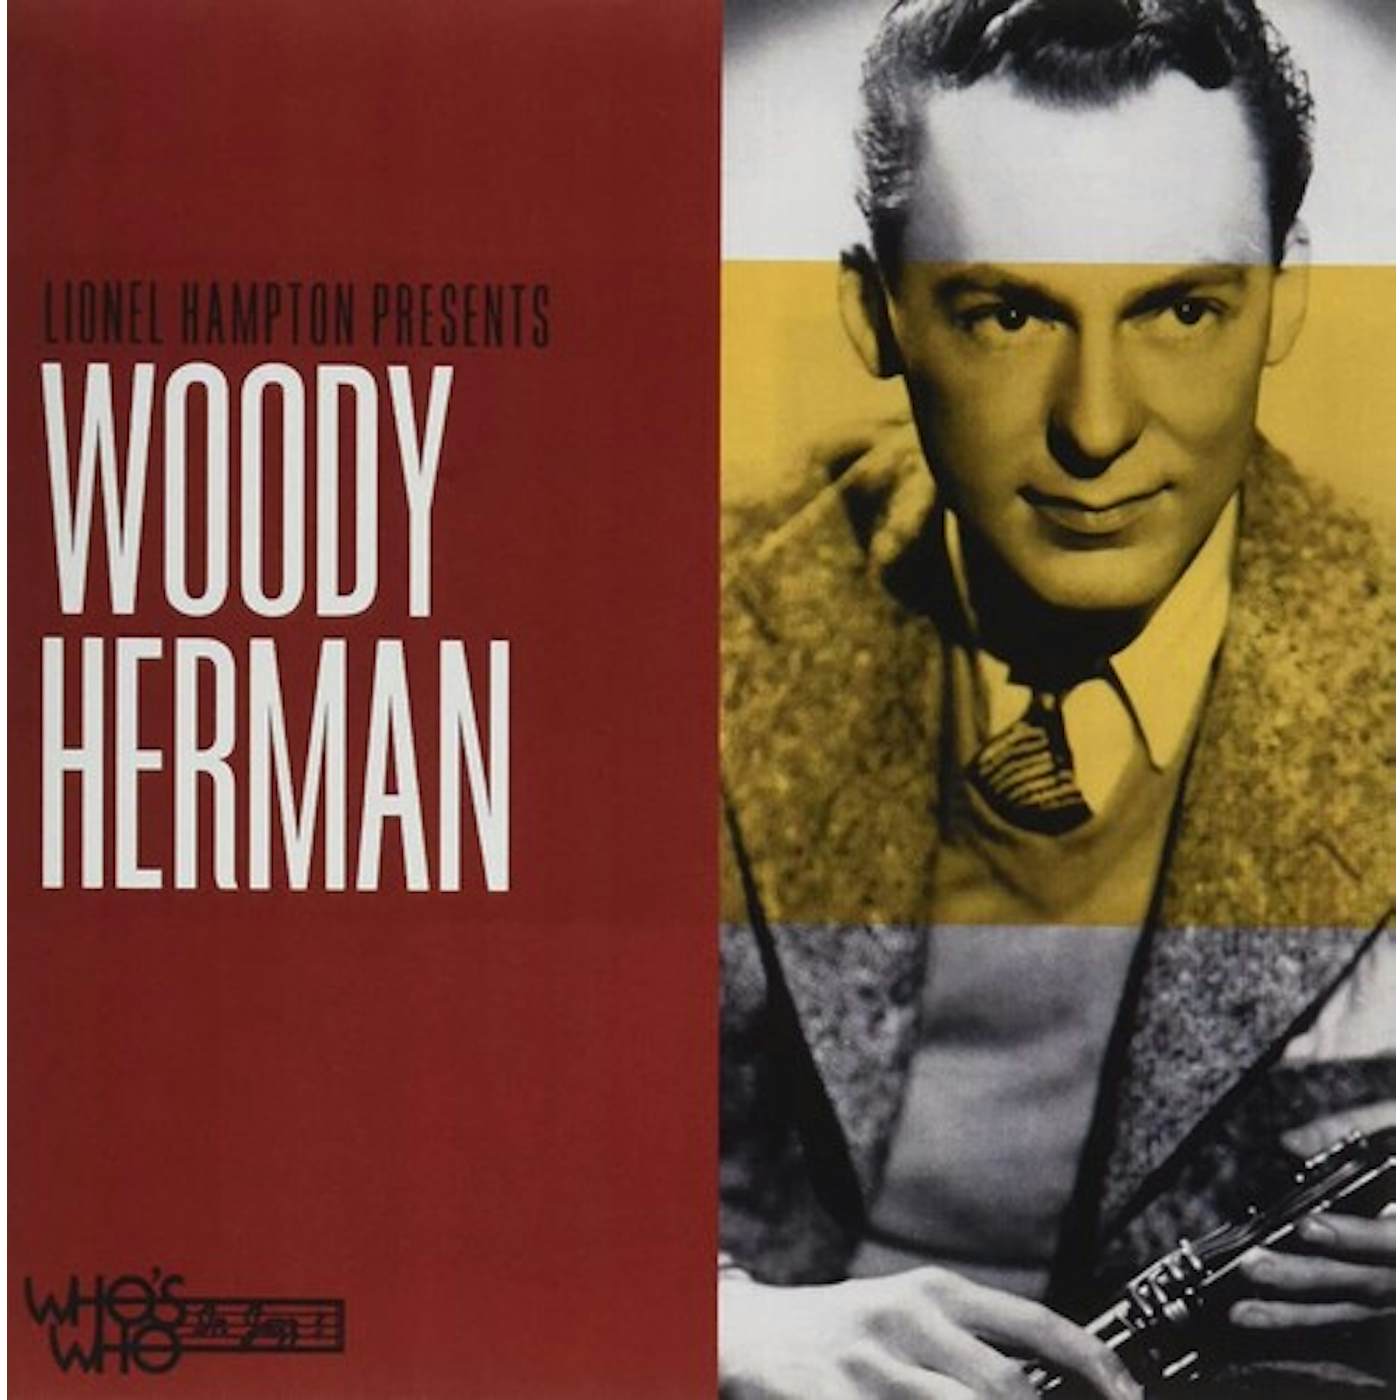 LIONEL HAMPTON PRESENTS: WOODY HERMAN CD